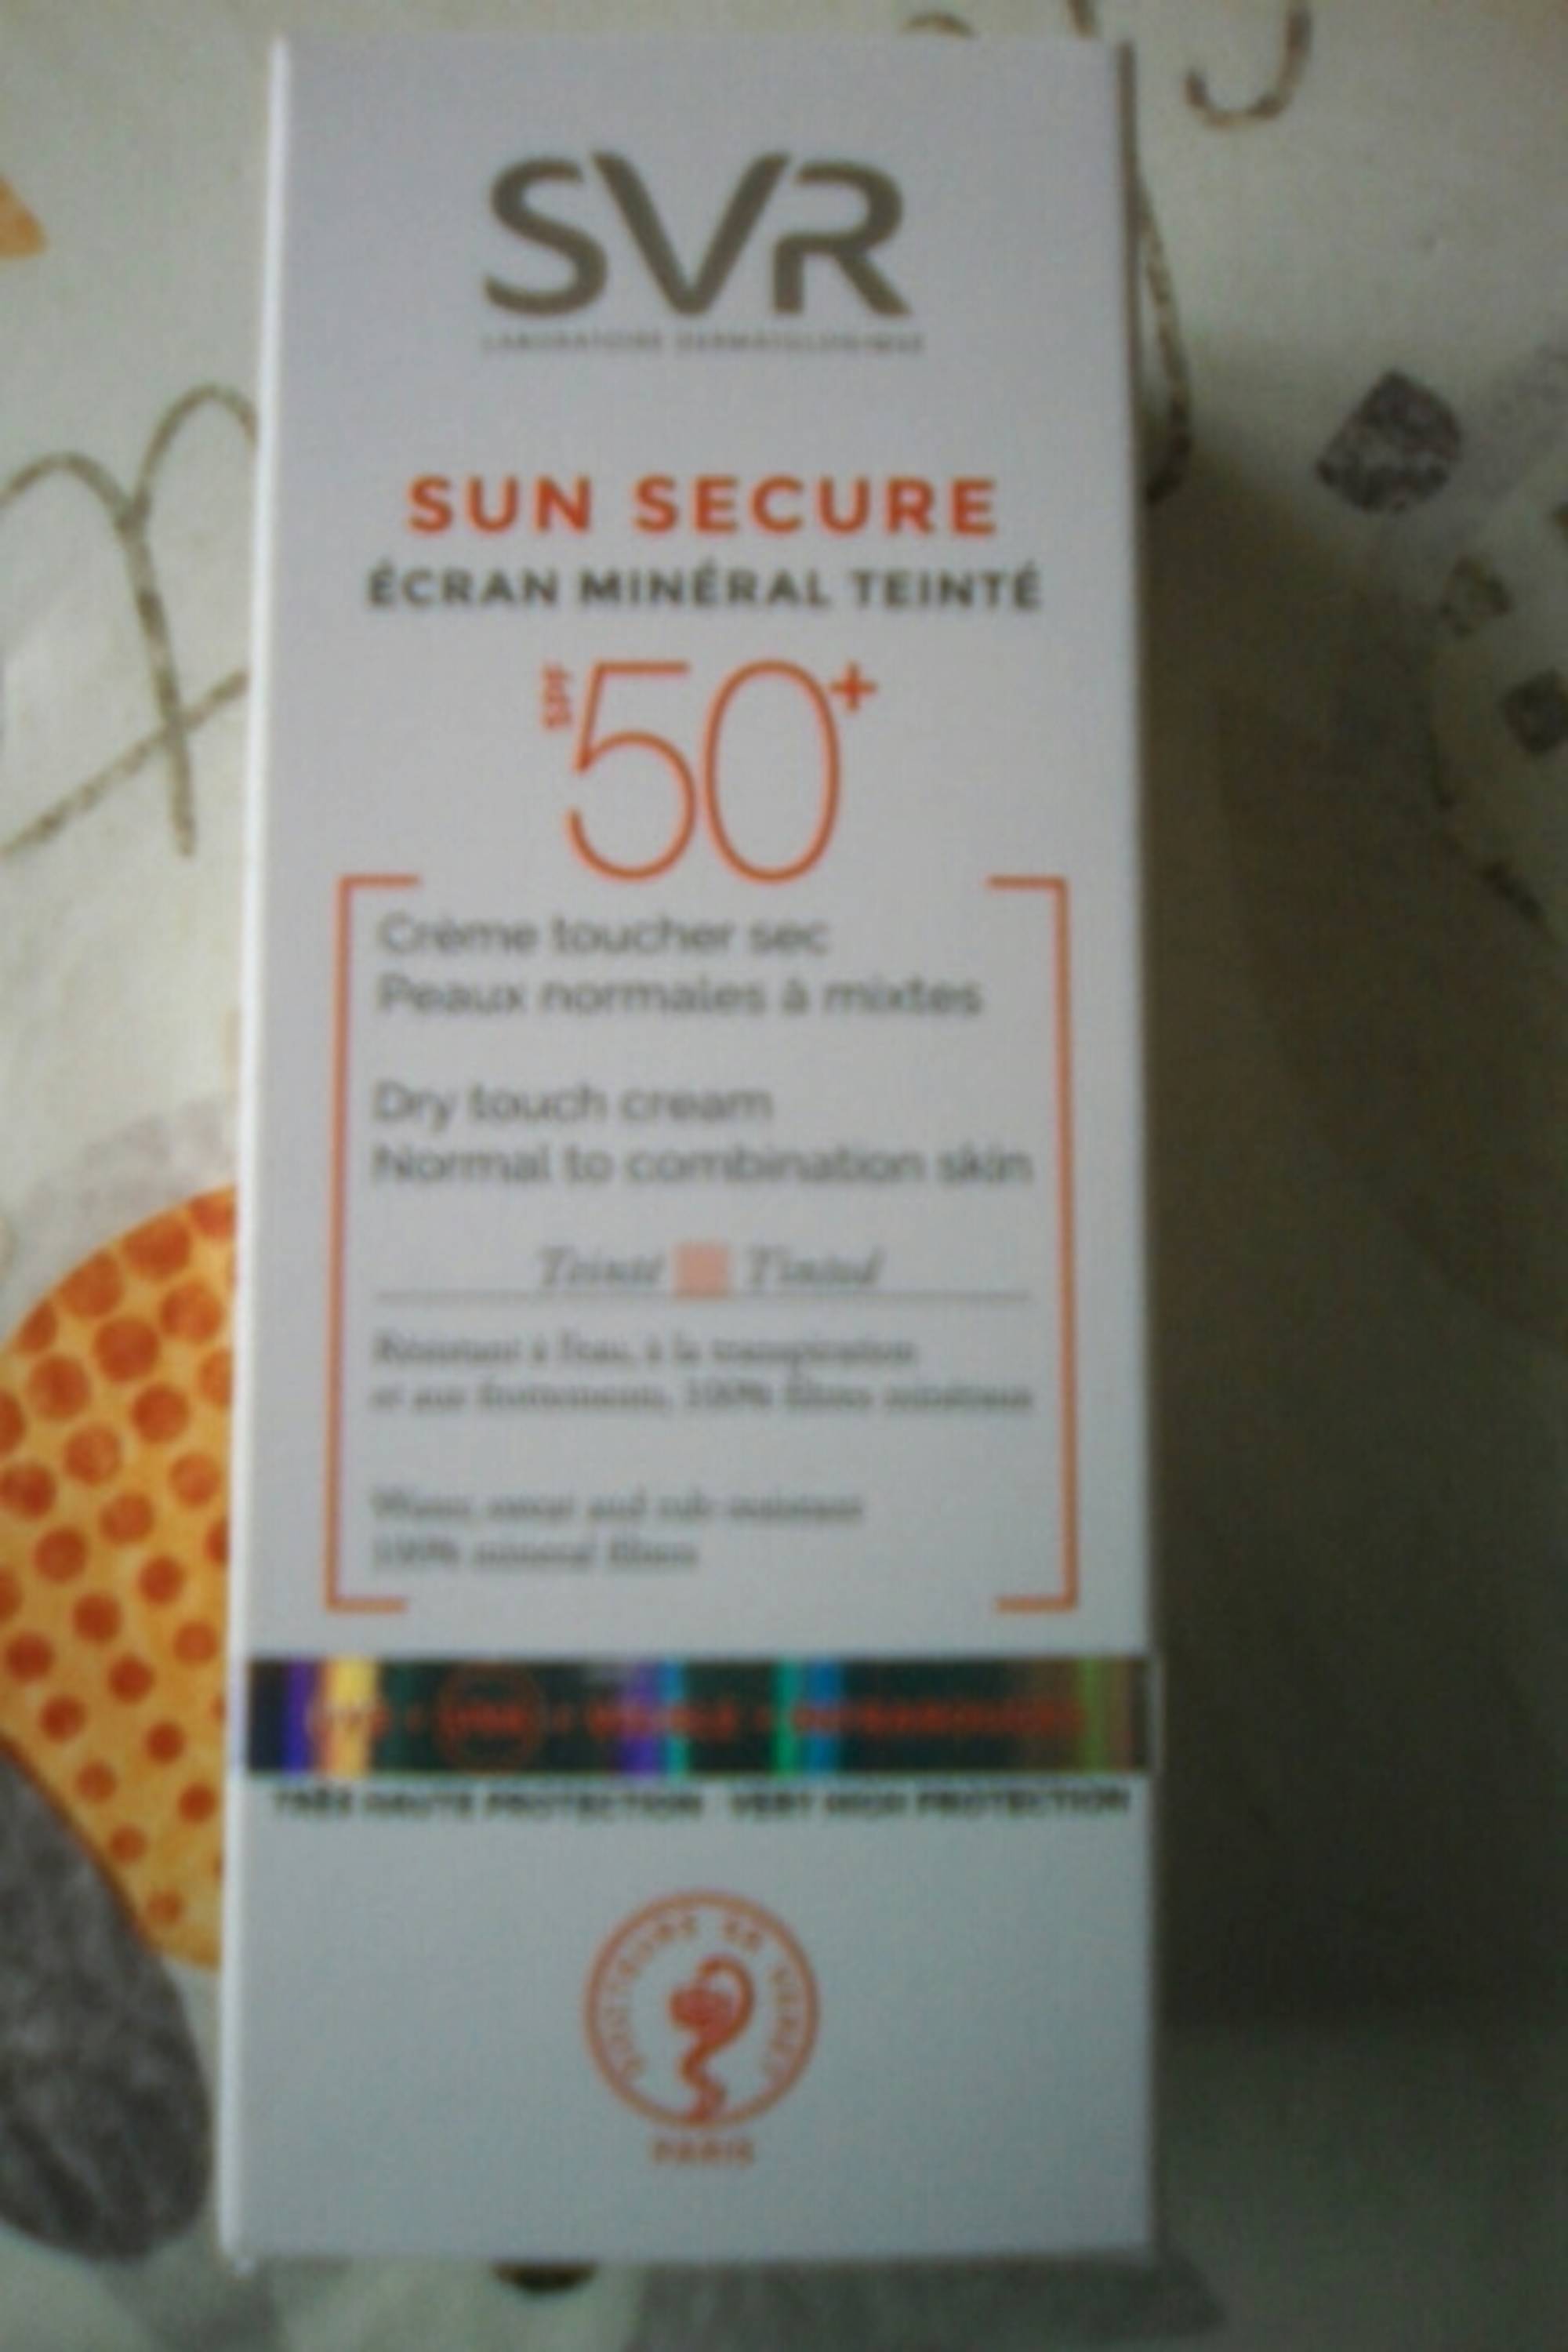 SVR - Sun secure - Ecran minéral teinté spf 50+